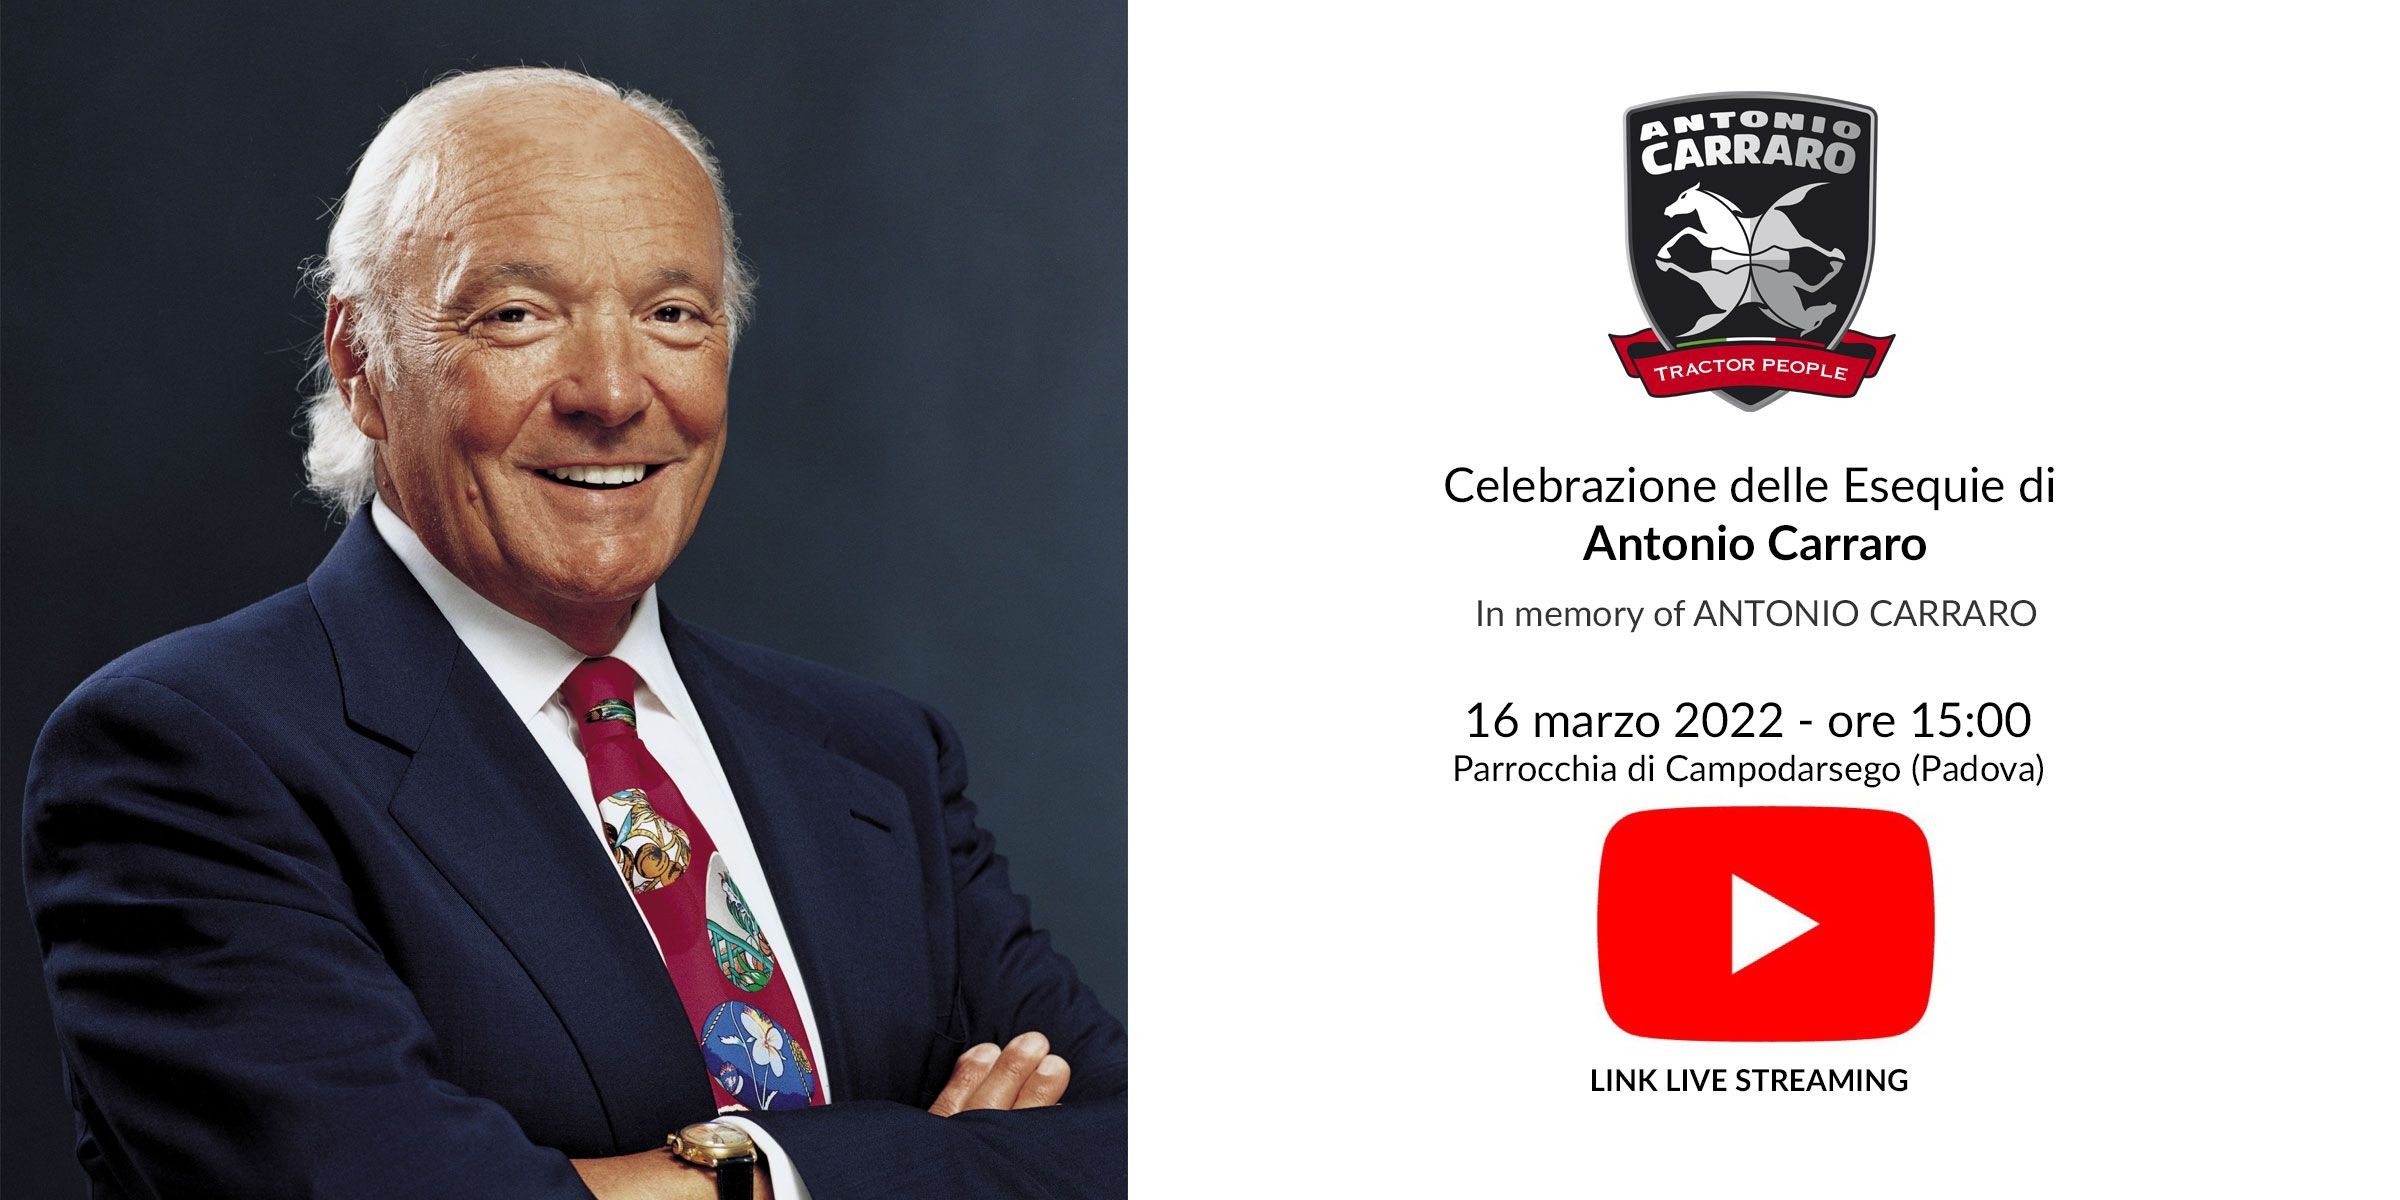 Başkanımız Antonio Carraro'nun cenaze töreni 16.03.2022 TSI - 17:00